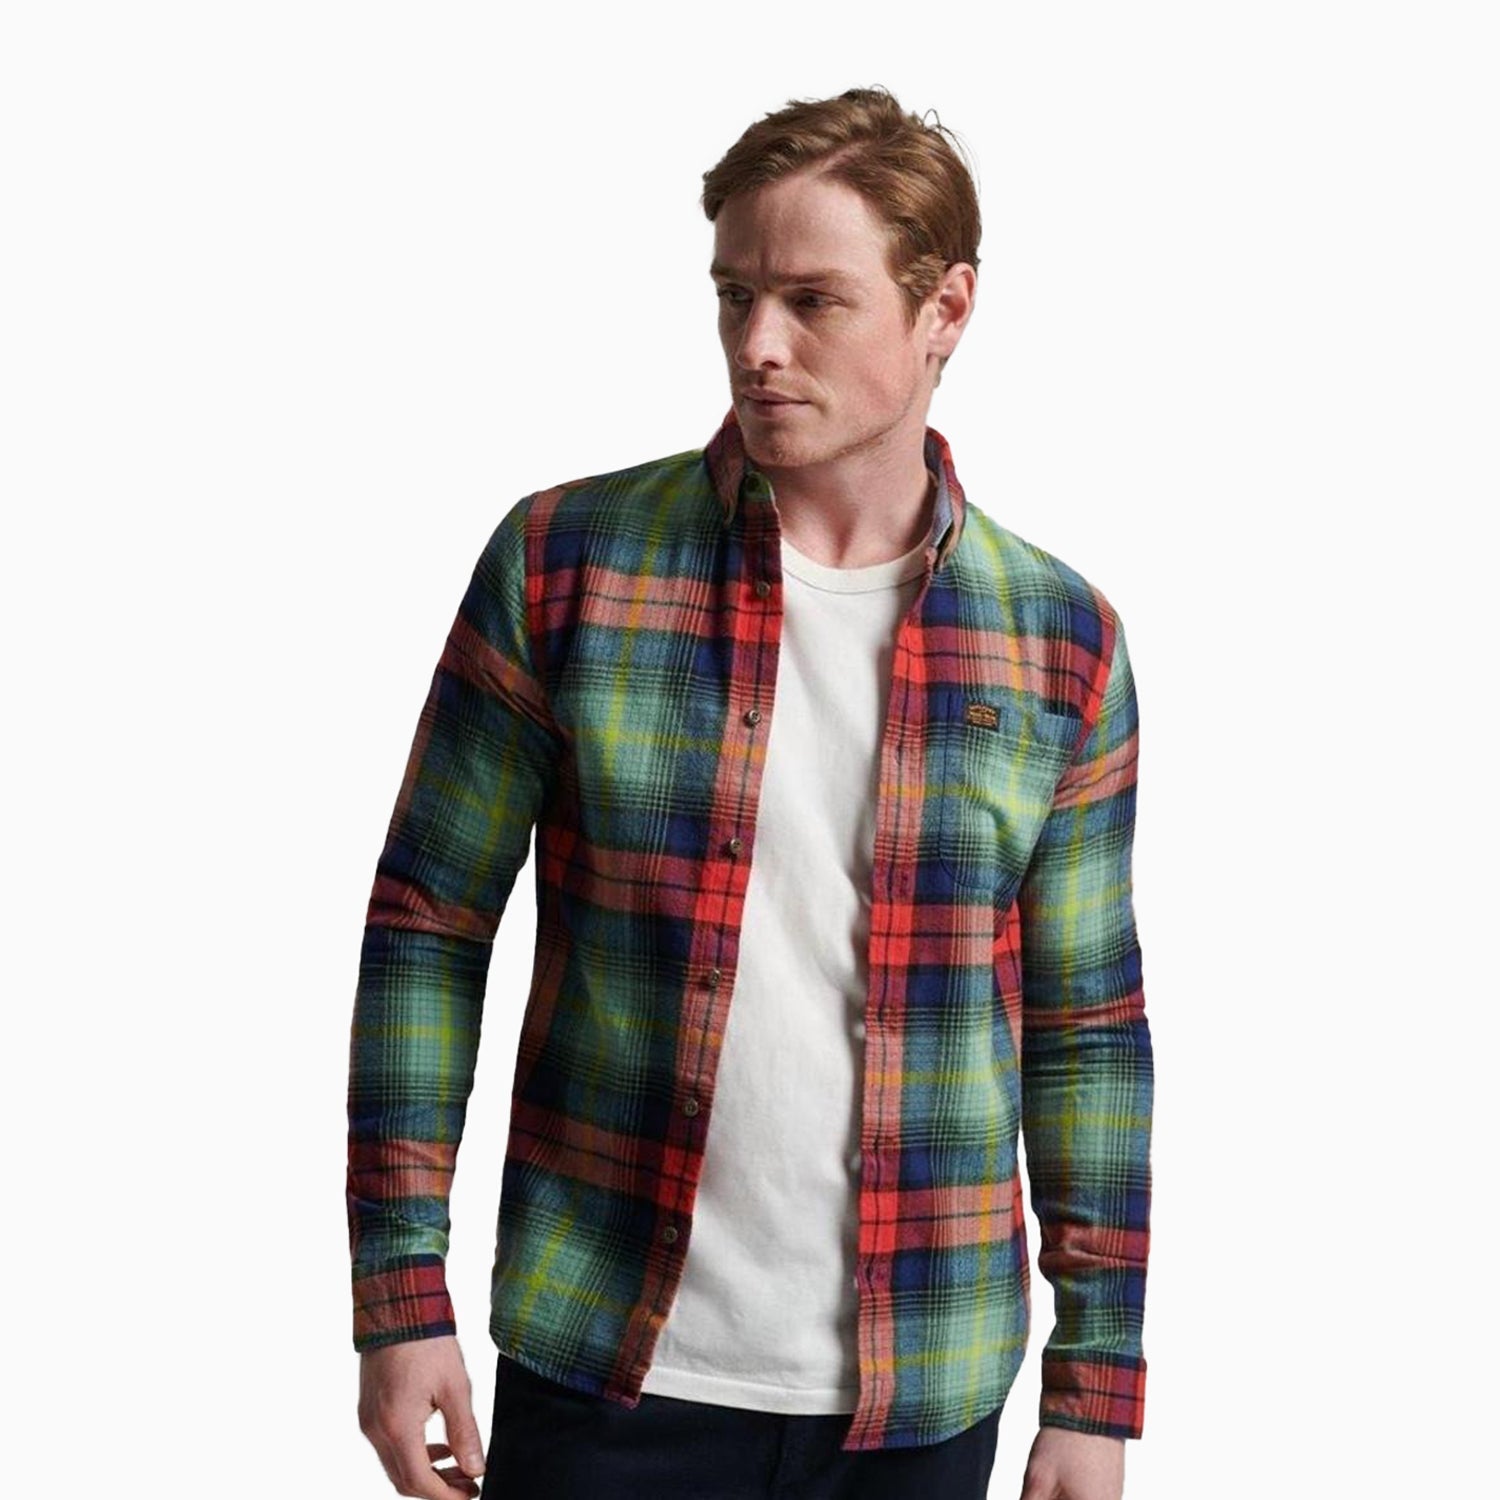 Superdry Men's Organic Cotton Vintage Lumberjack Shirt - Color: Arizona Check - Tops and Bottoms USA -